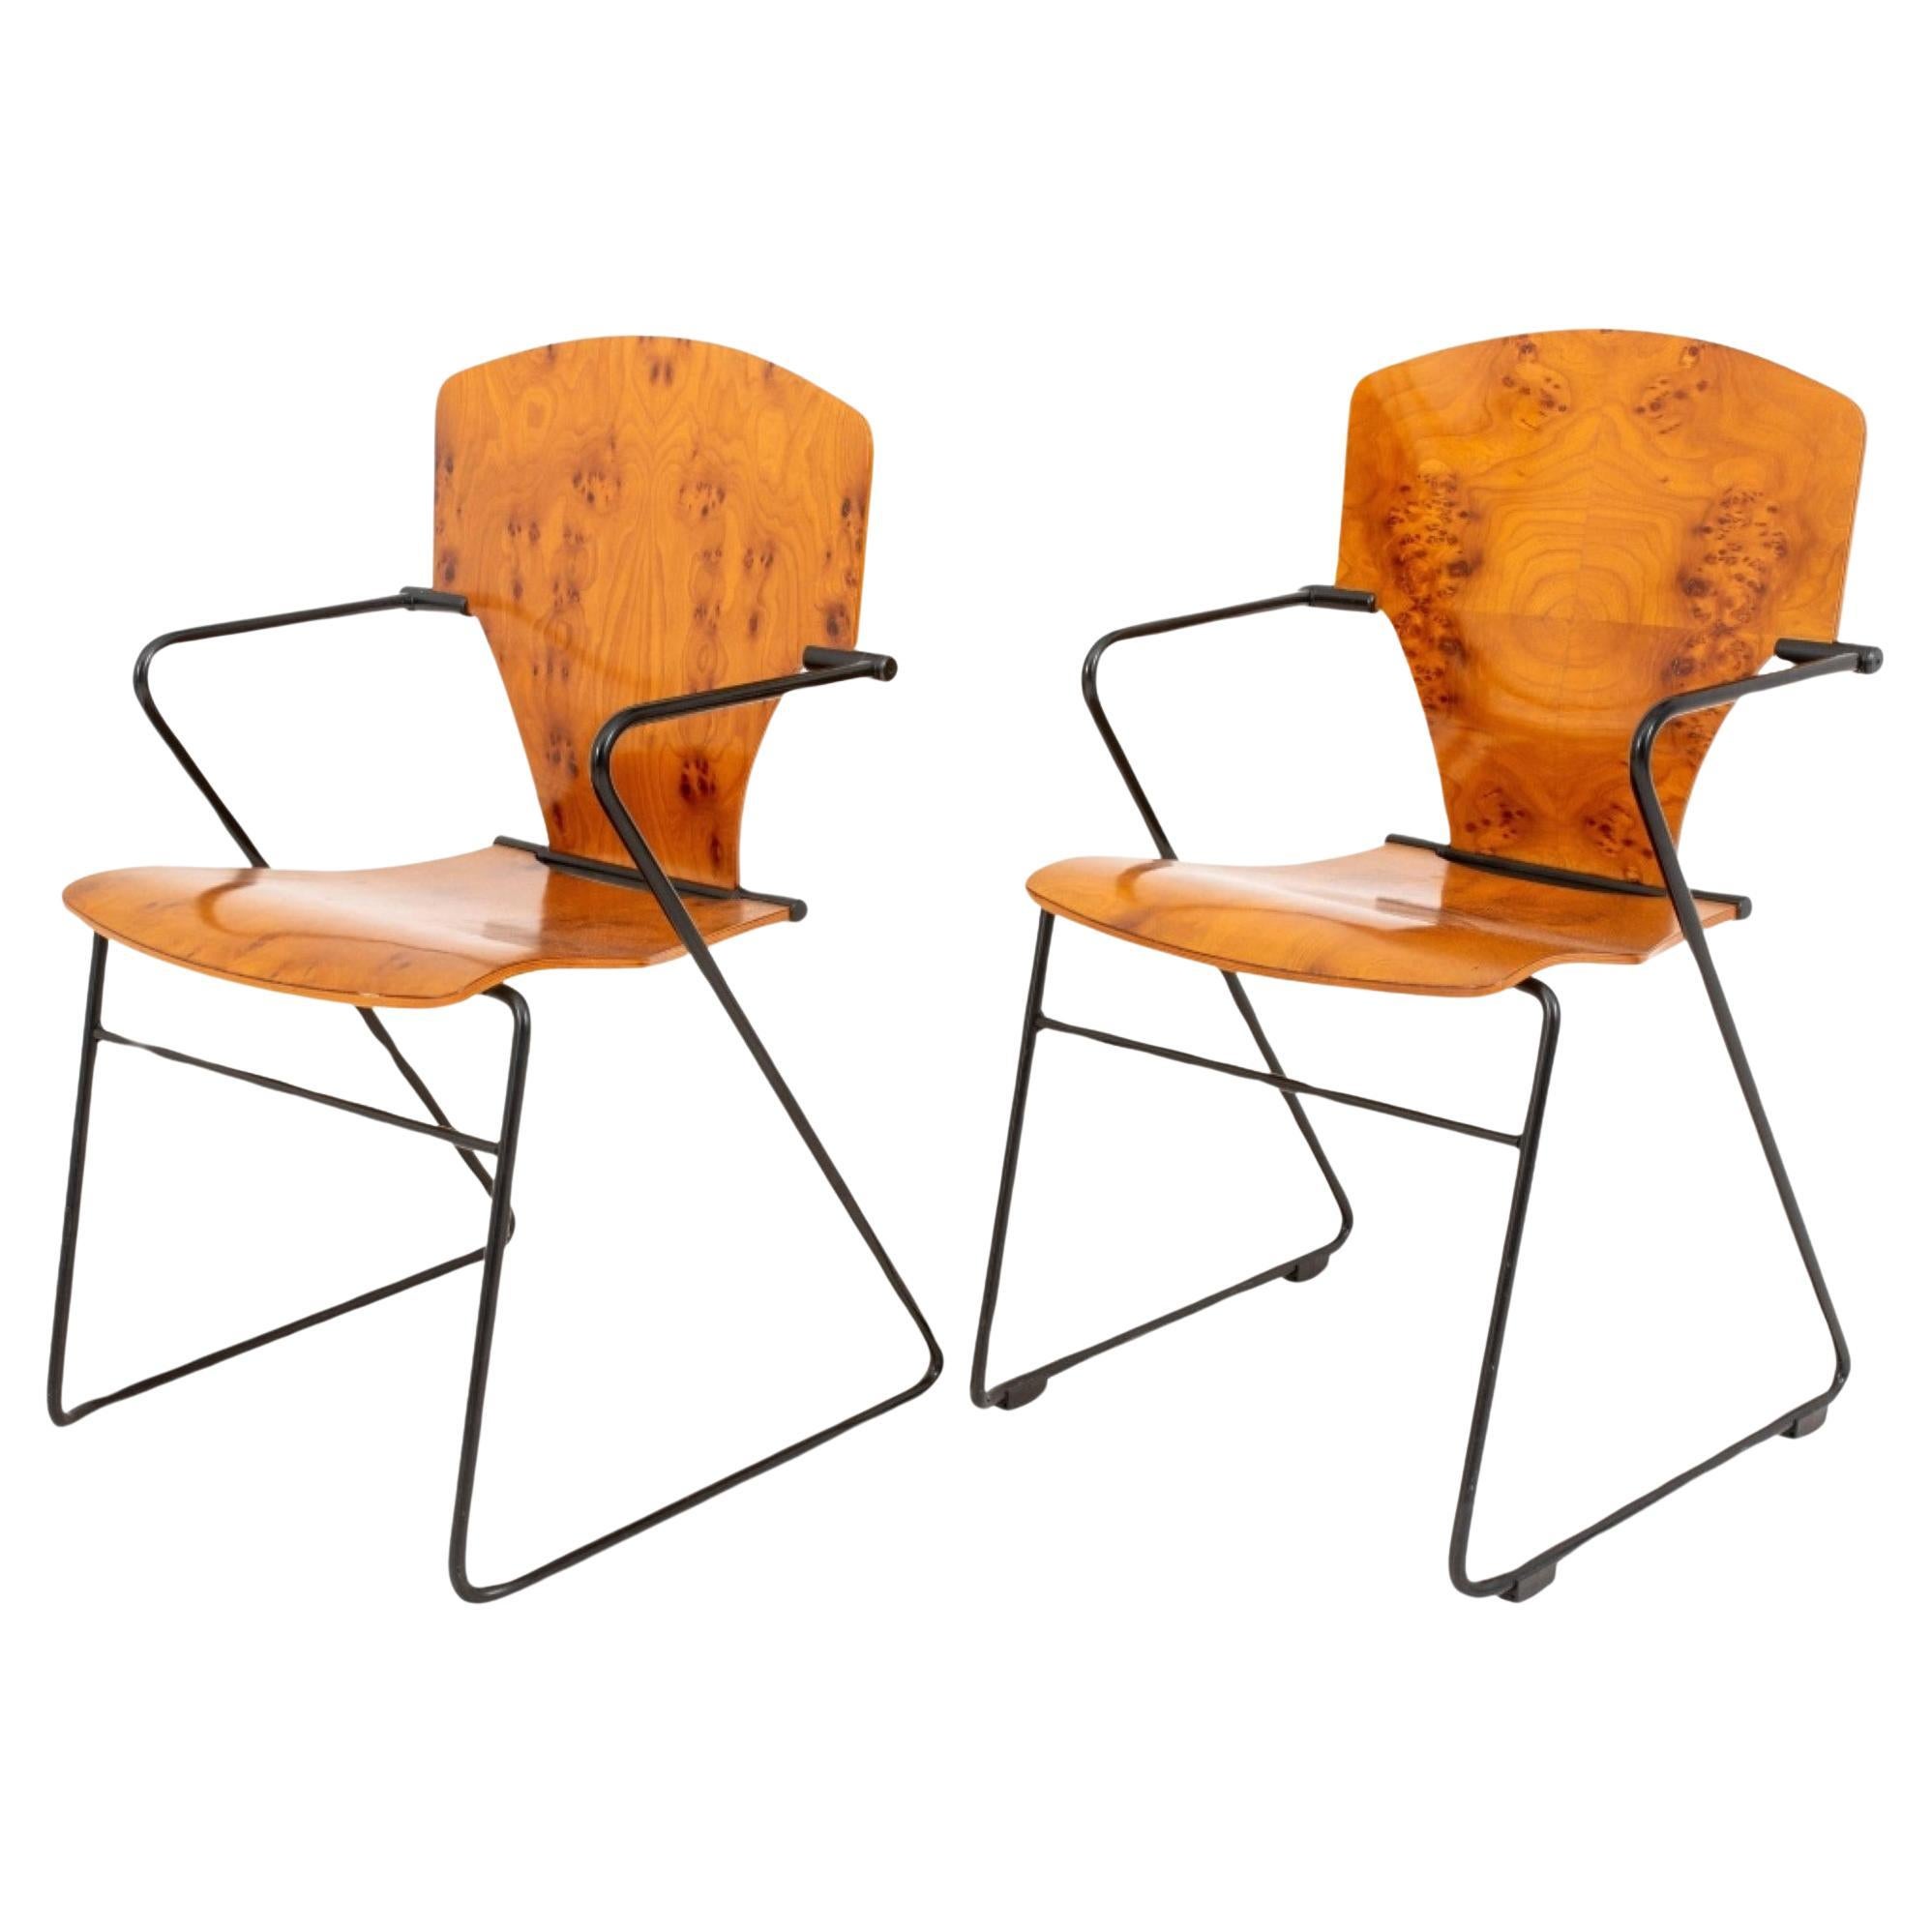 Josep Mora für Egoa: Stuhl „Modell 300“, 2 Stühle im Angebot